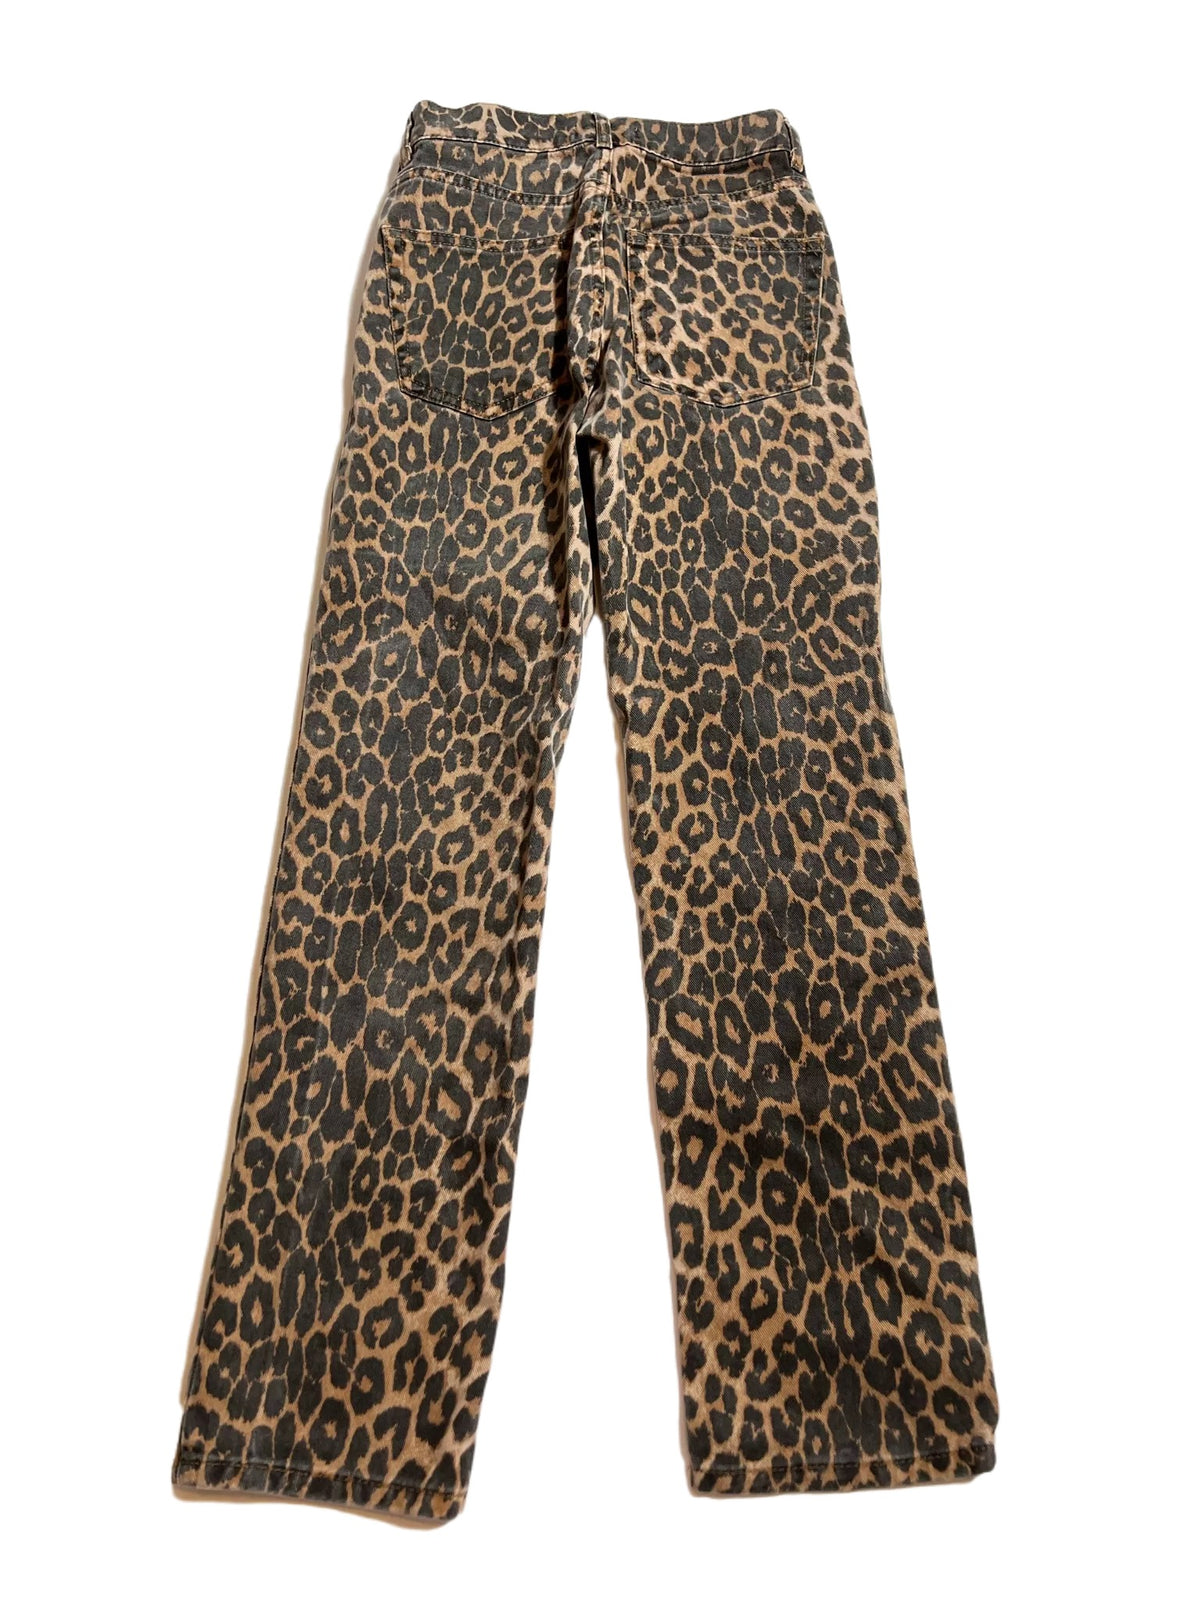 TRF- Cheetah Print Jeans